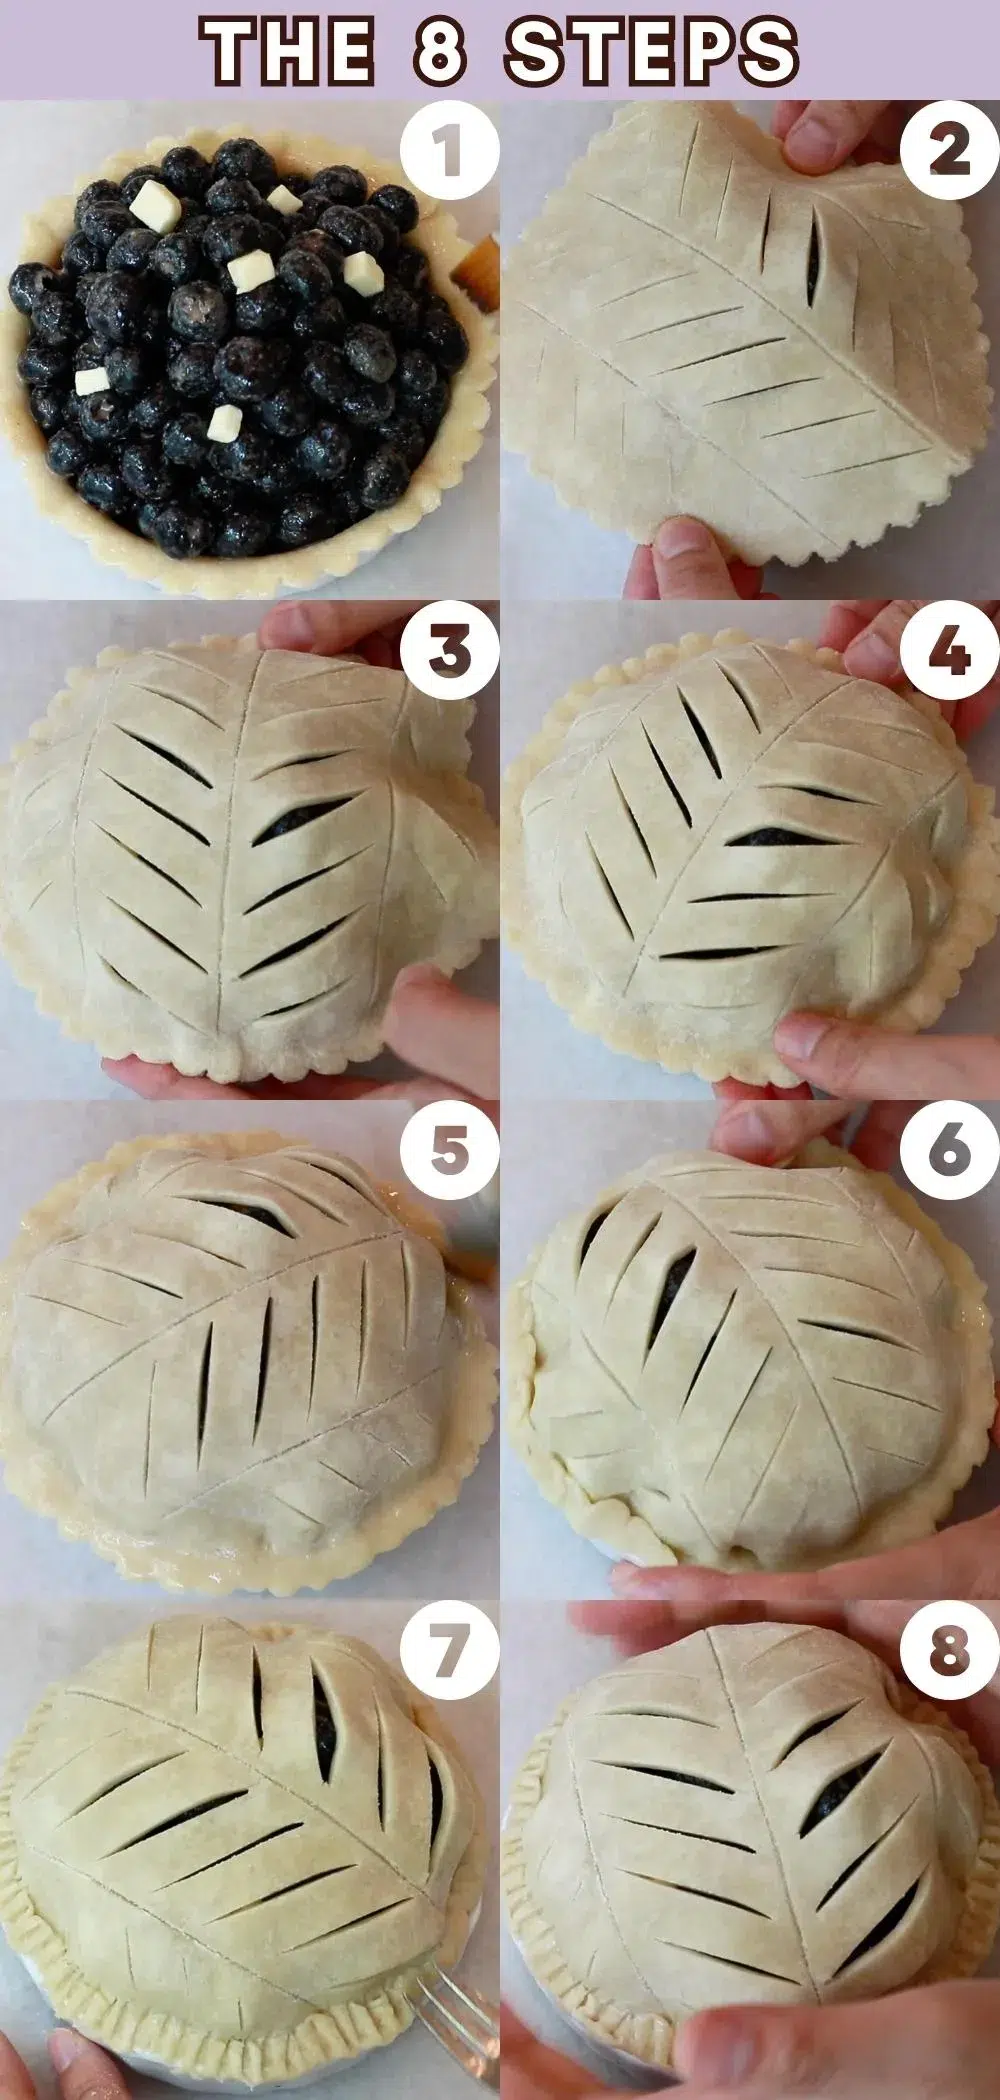 how to finish assembling pie dough